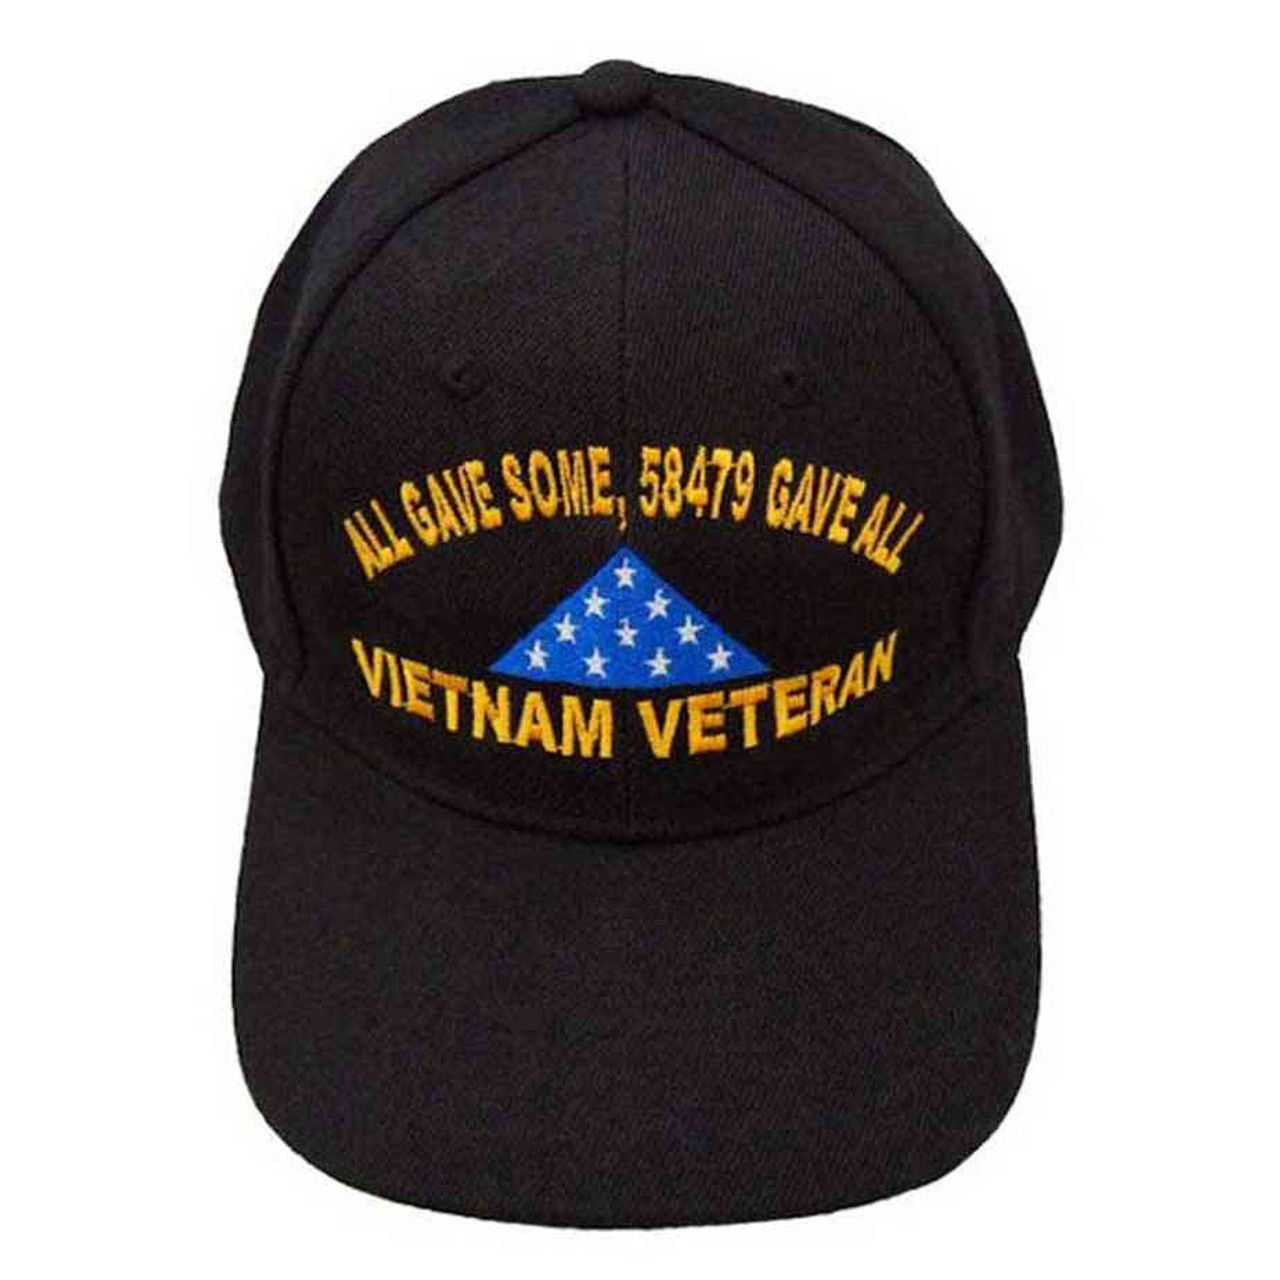 vietnam veteran all gave some 58479 gave all memorial hat